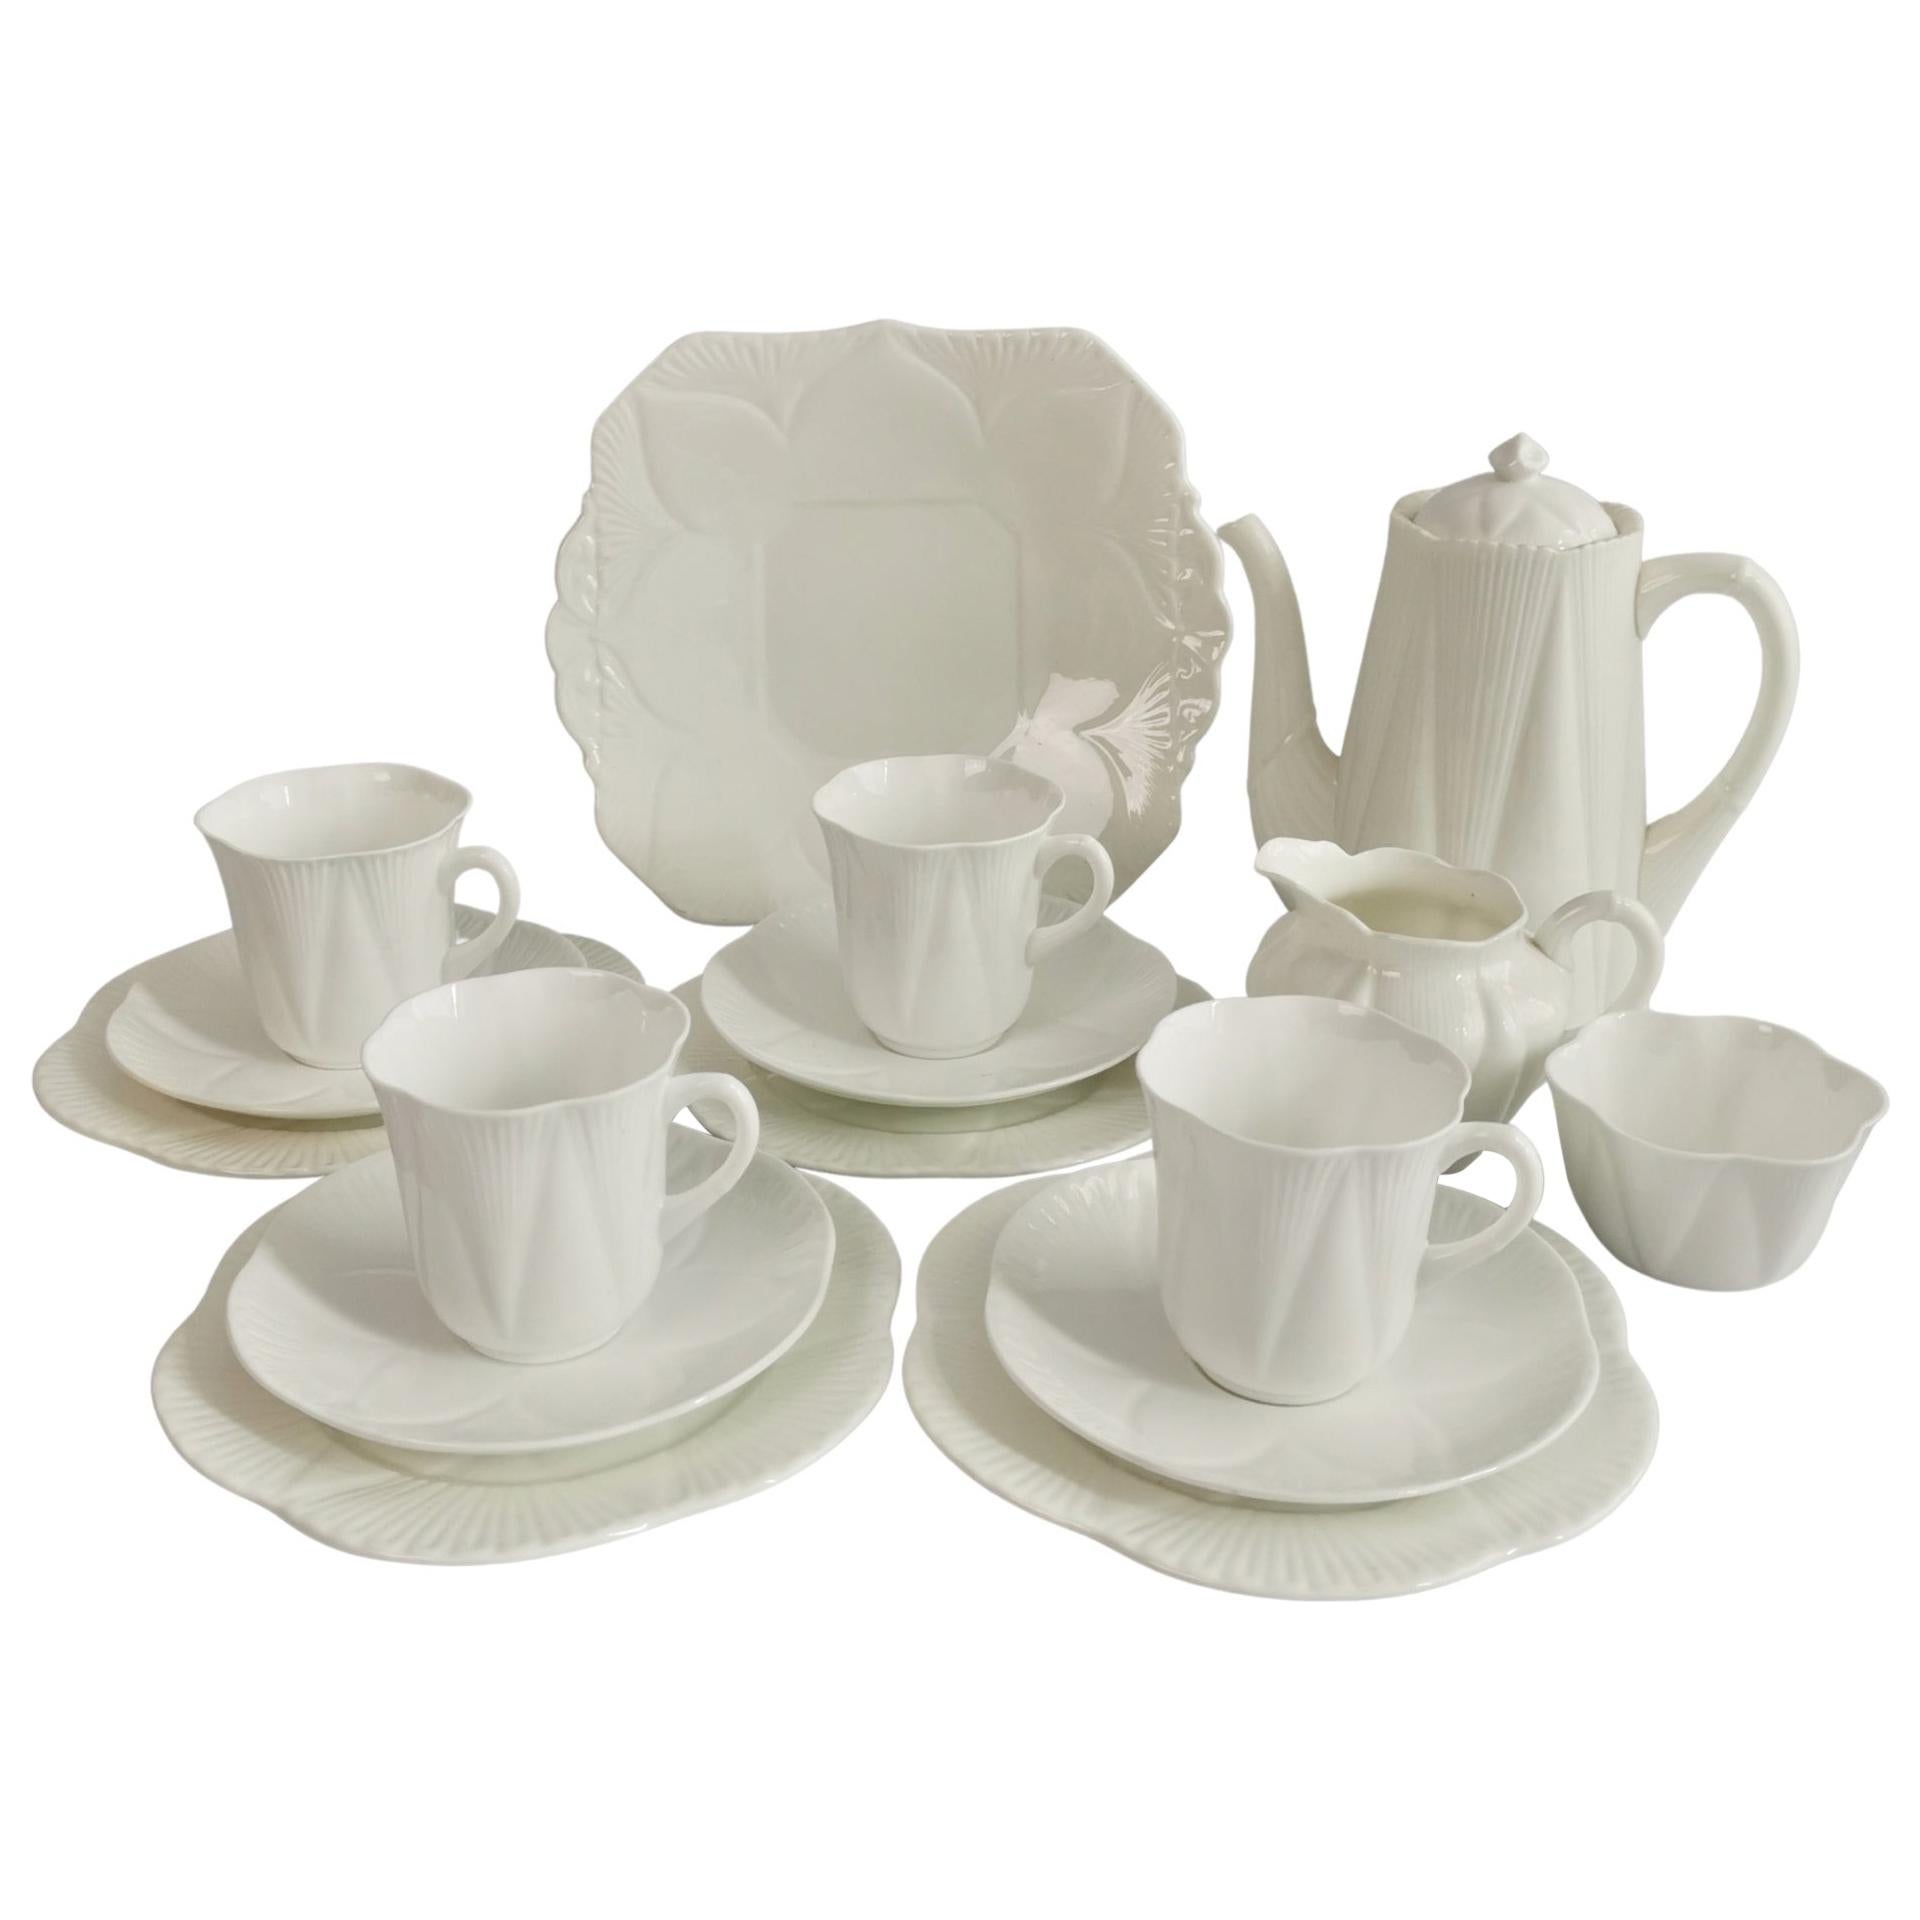 Shelley "Dainty White" Porcelain Coffee Service, 1926-1940